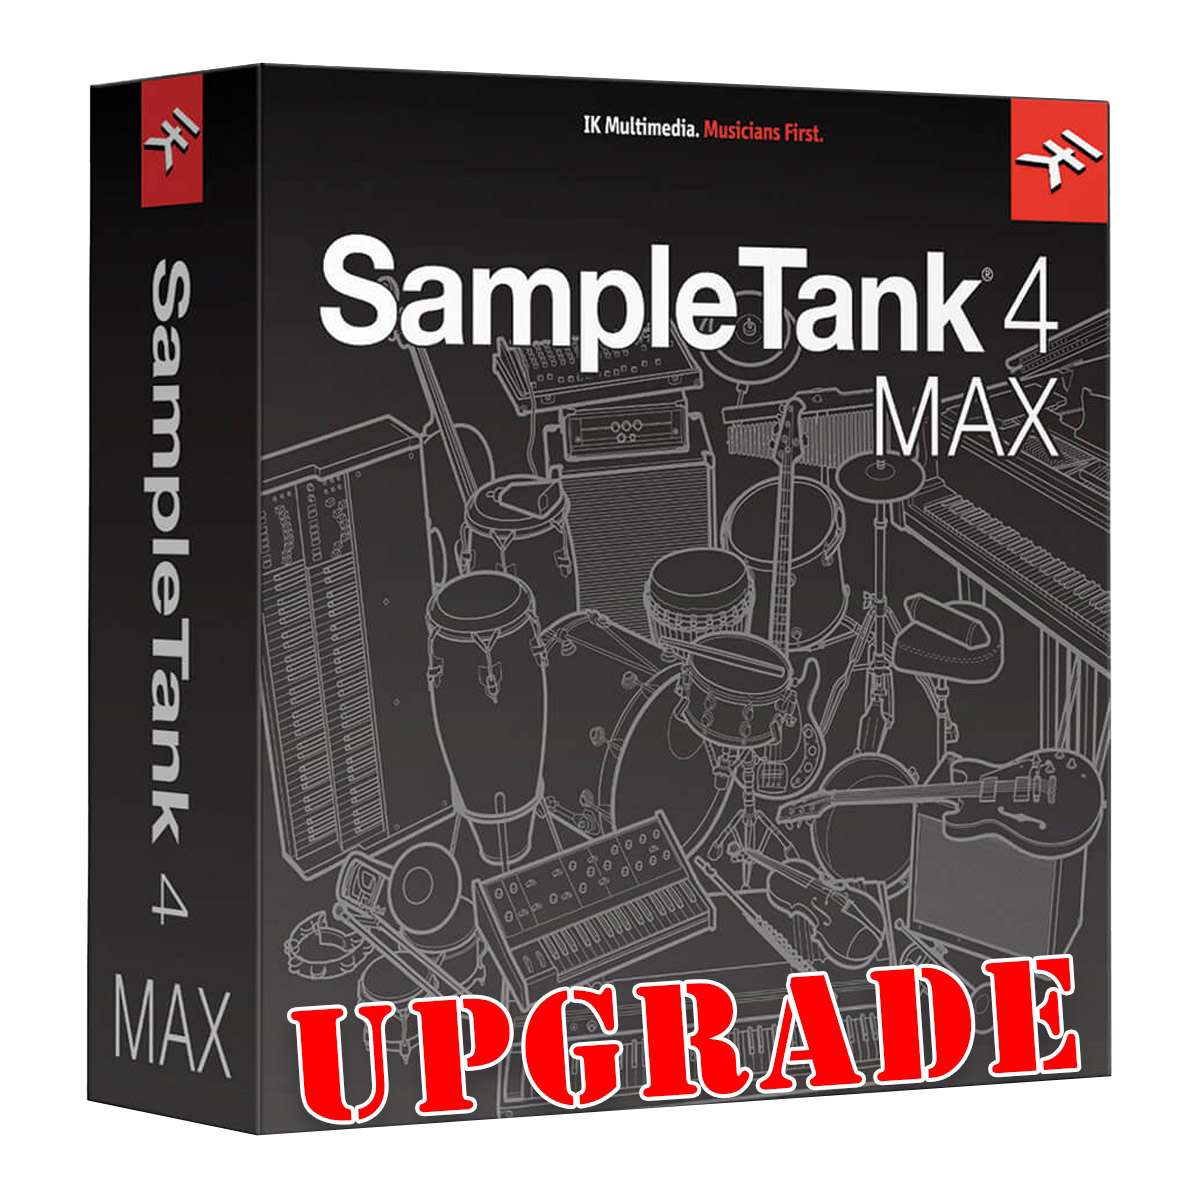 sampletank 4 full download